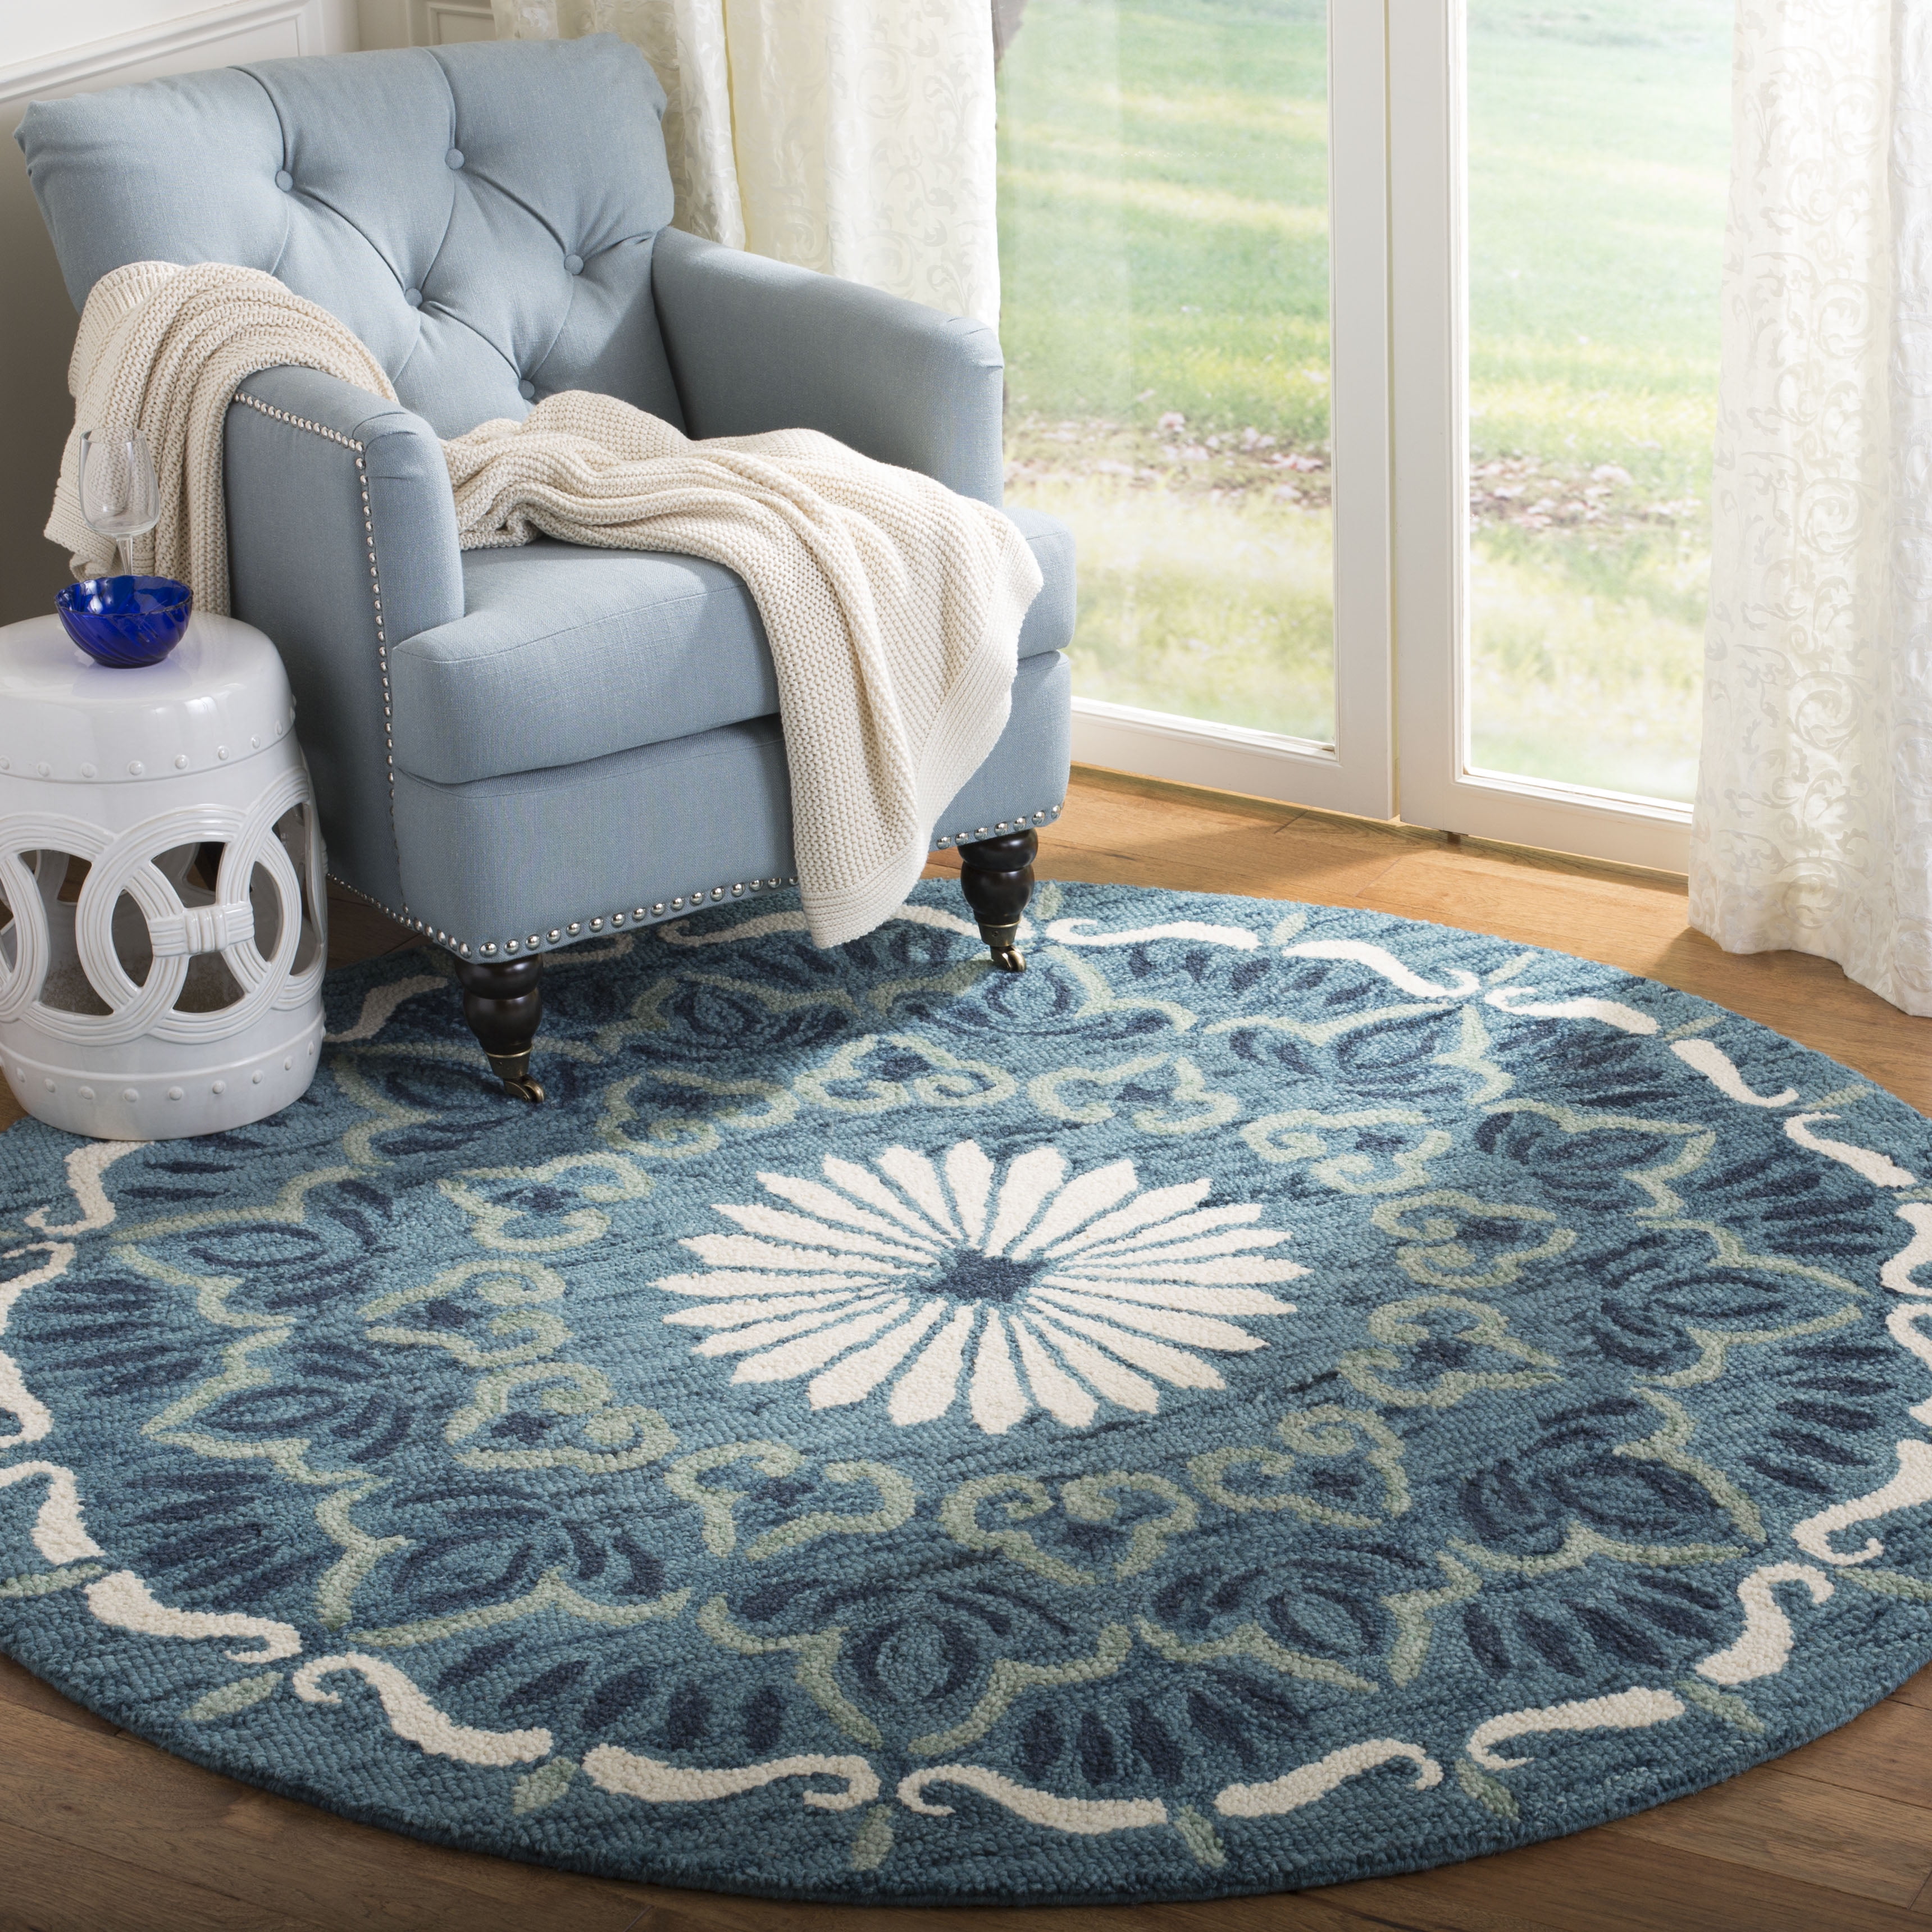 shop rugs online